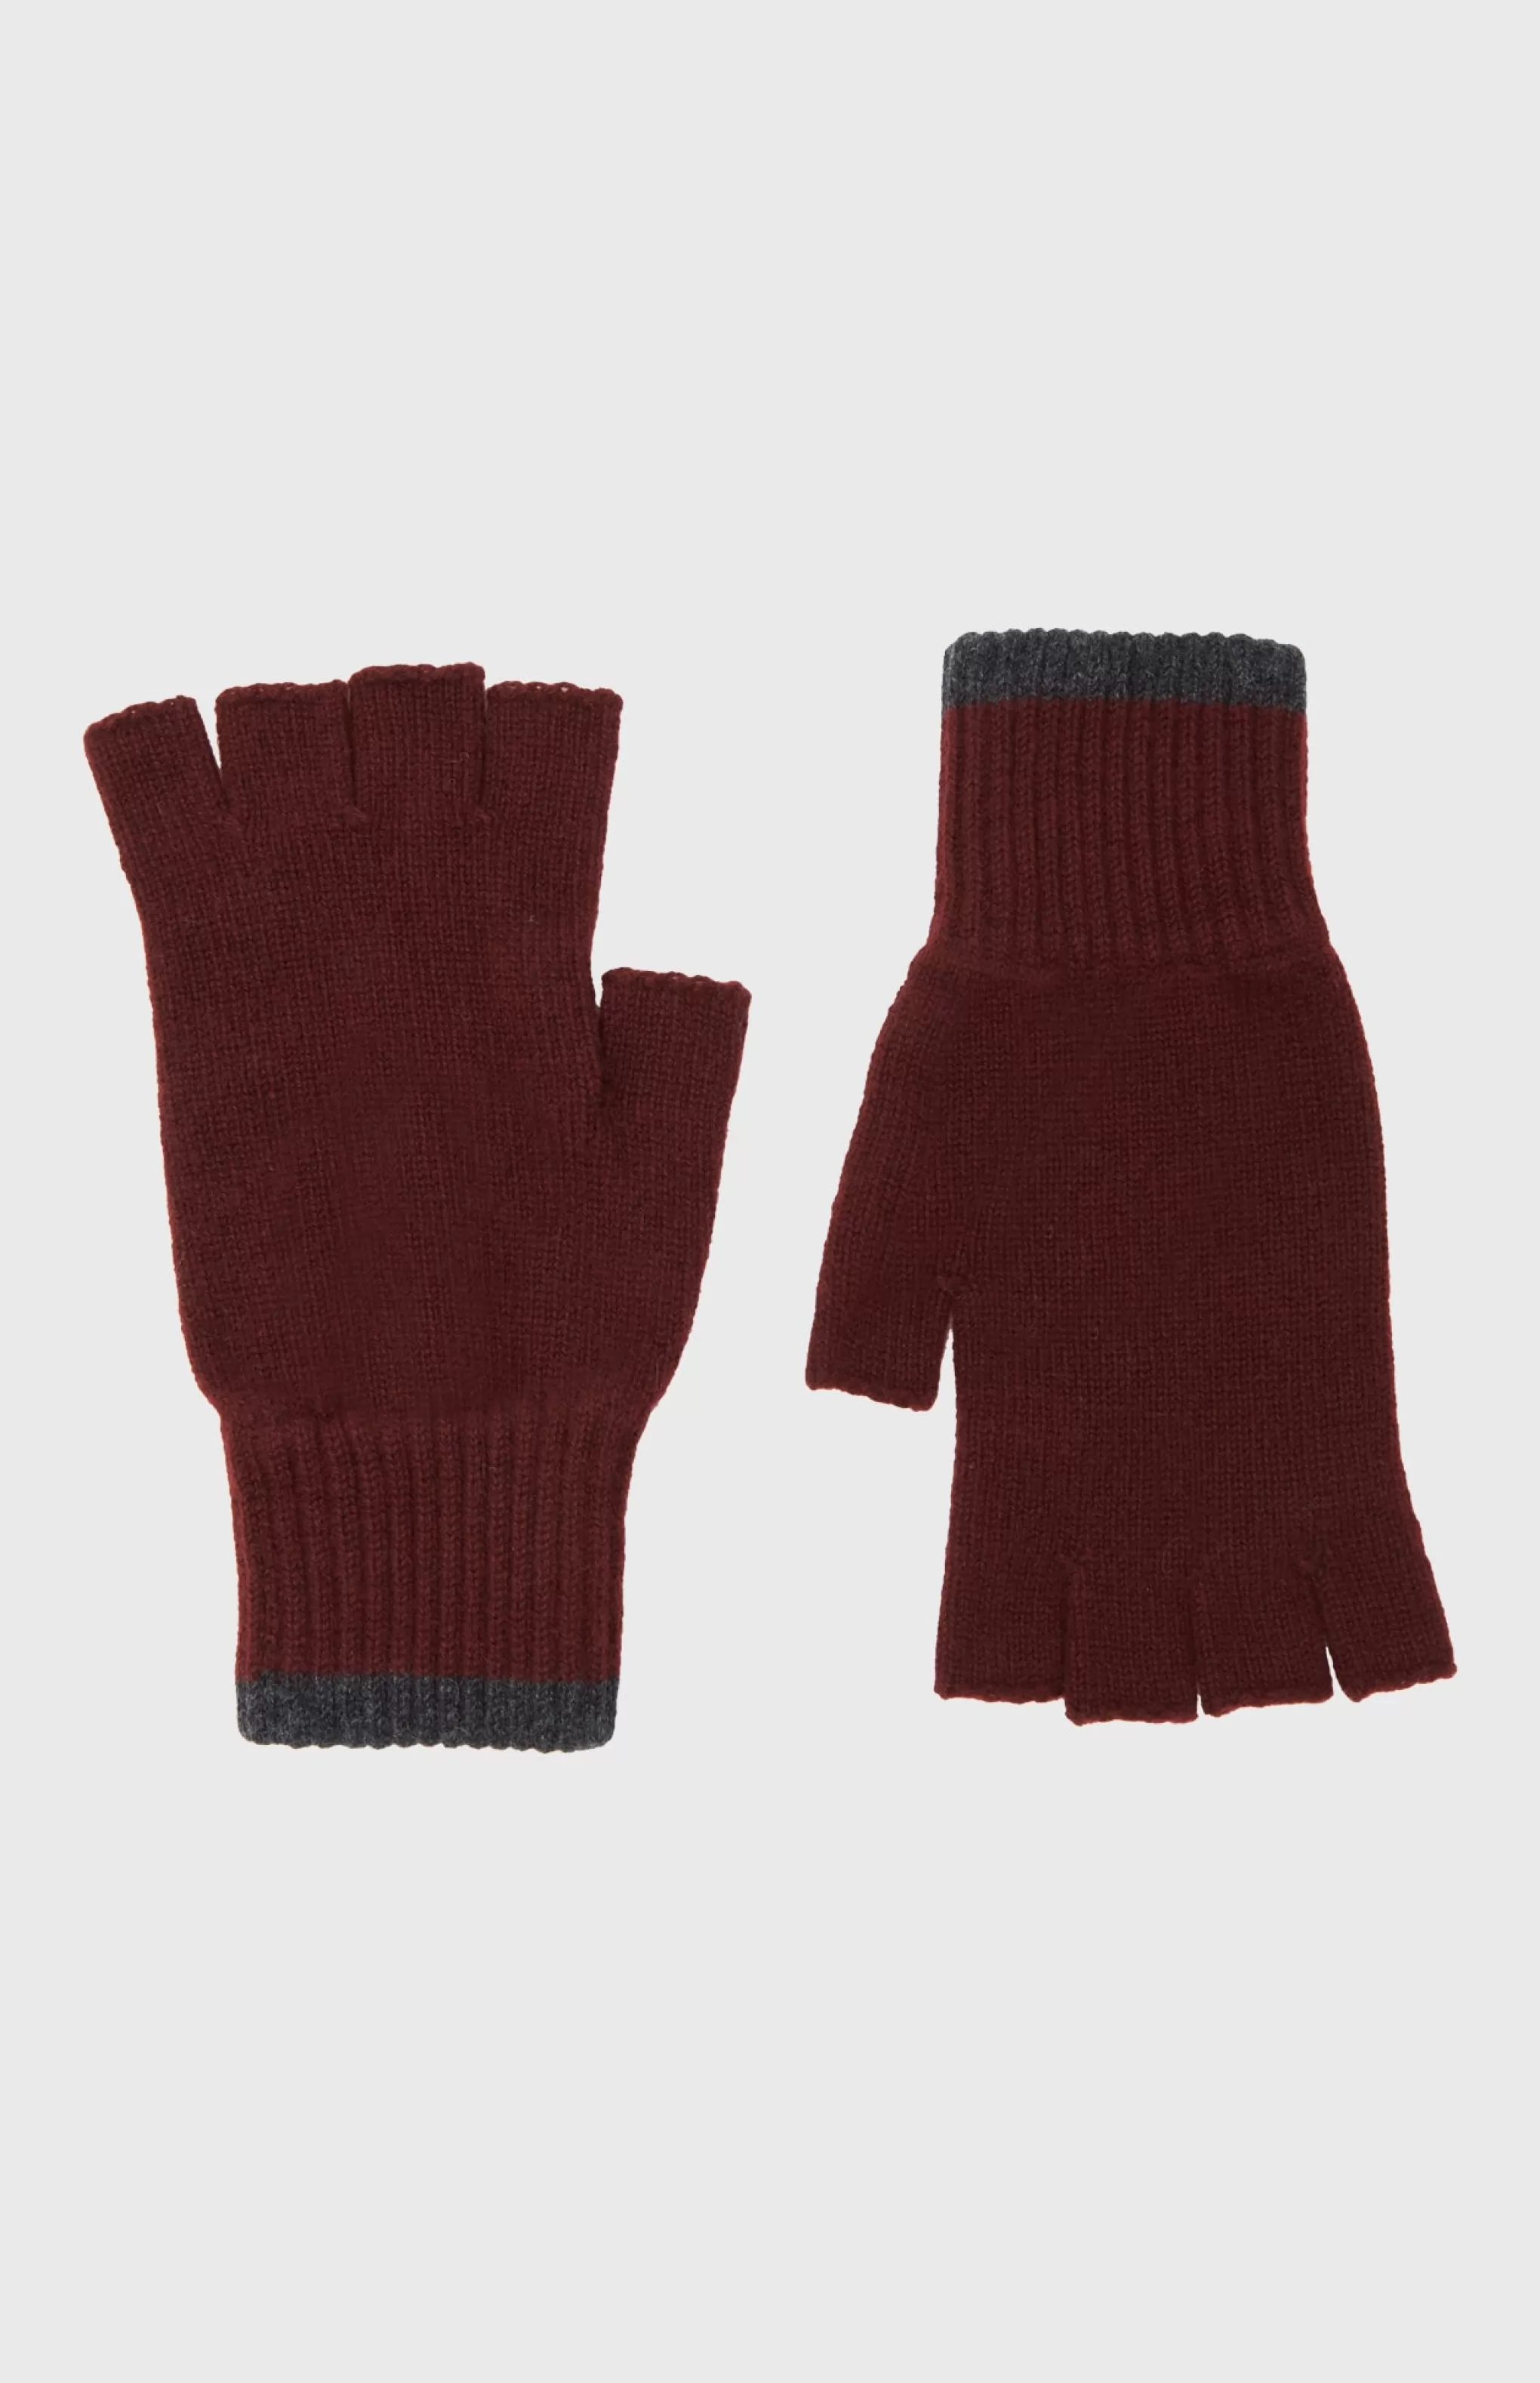 New Cashmere Fingerless Gloves Contrast Ribs In Dark Claret Men Gloves